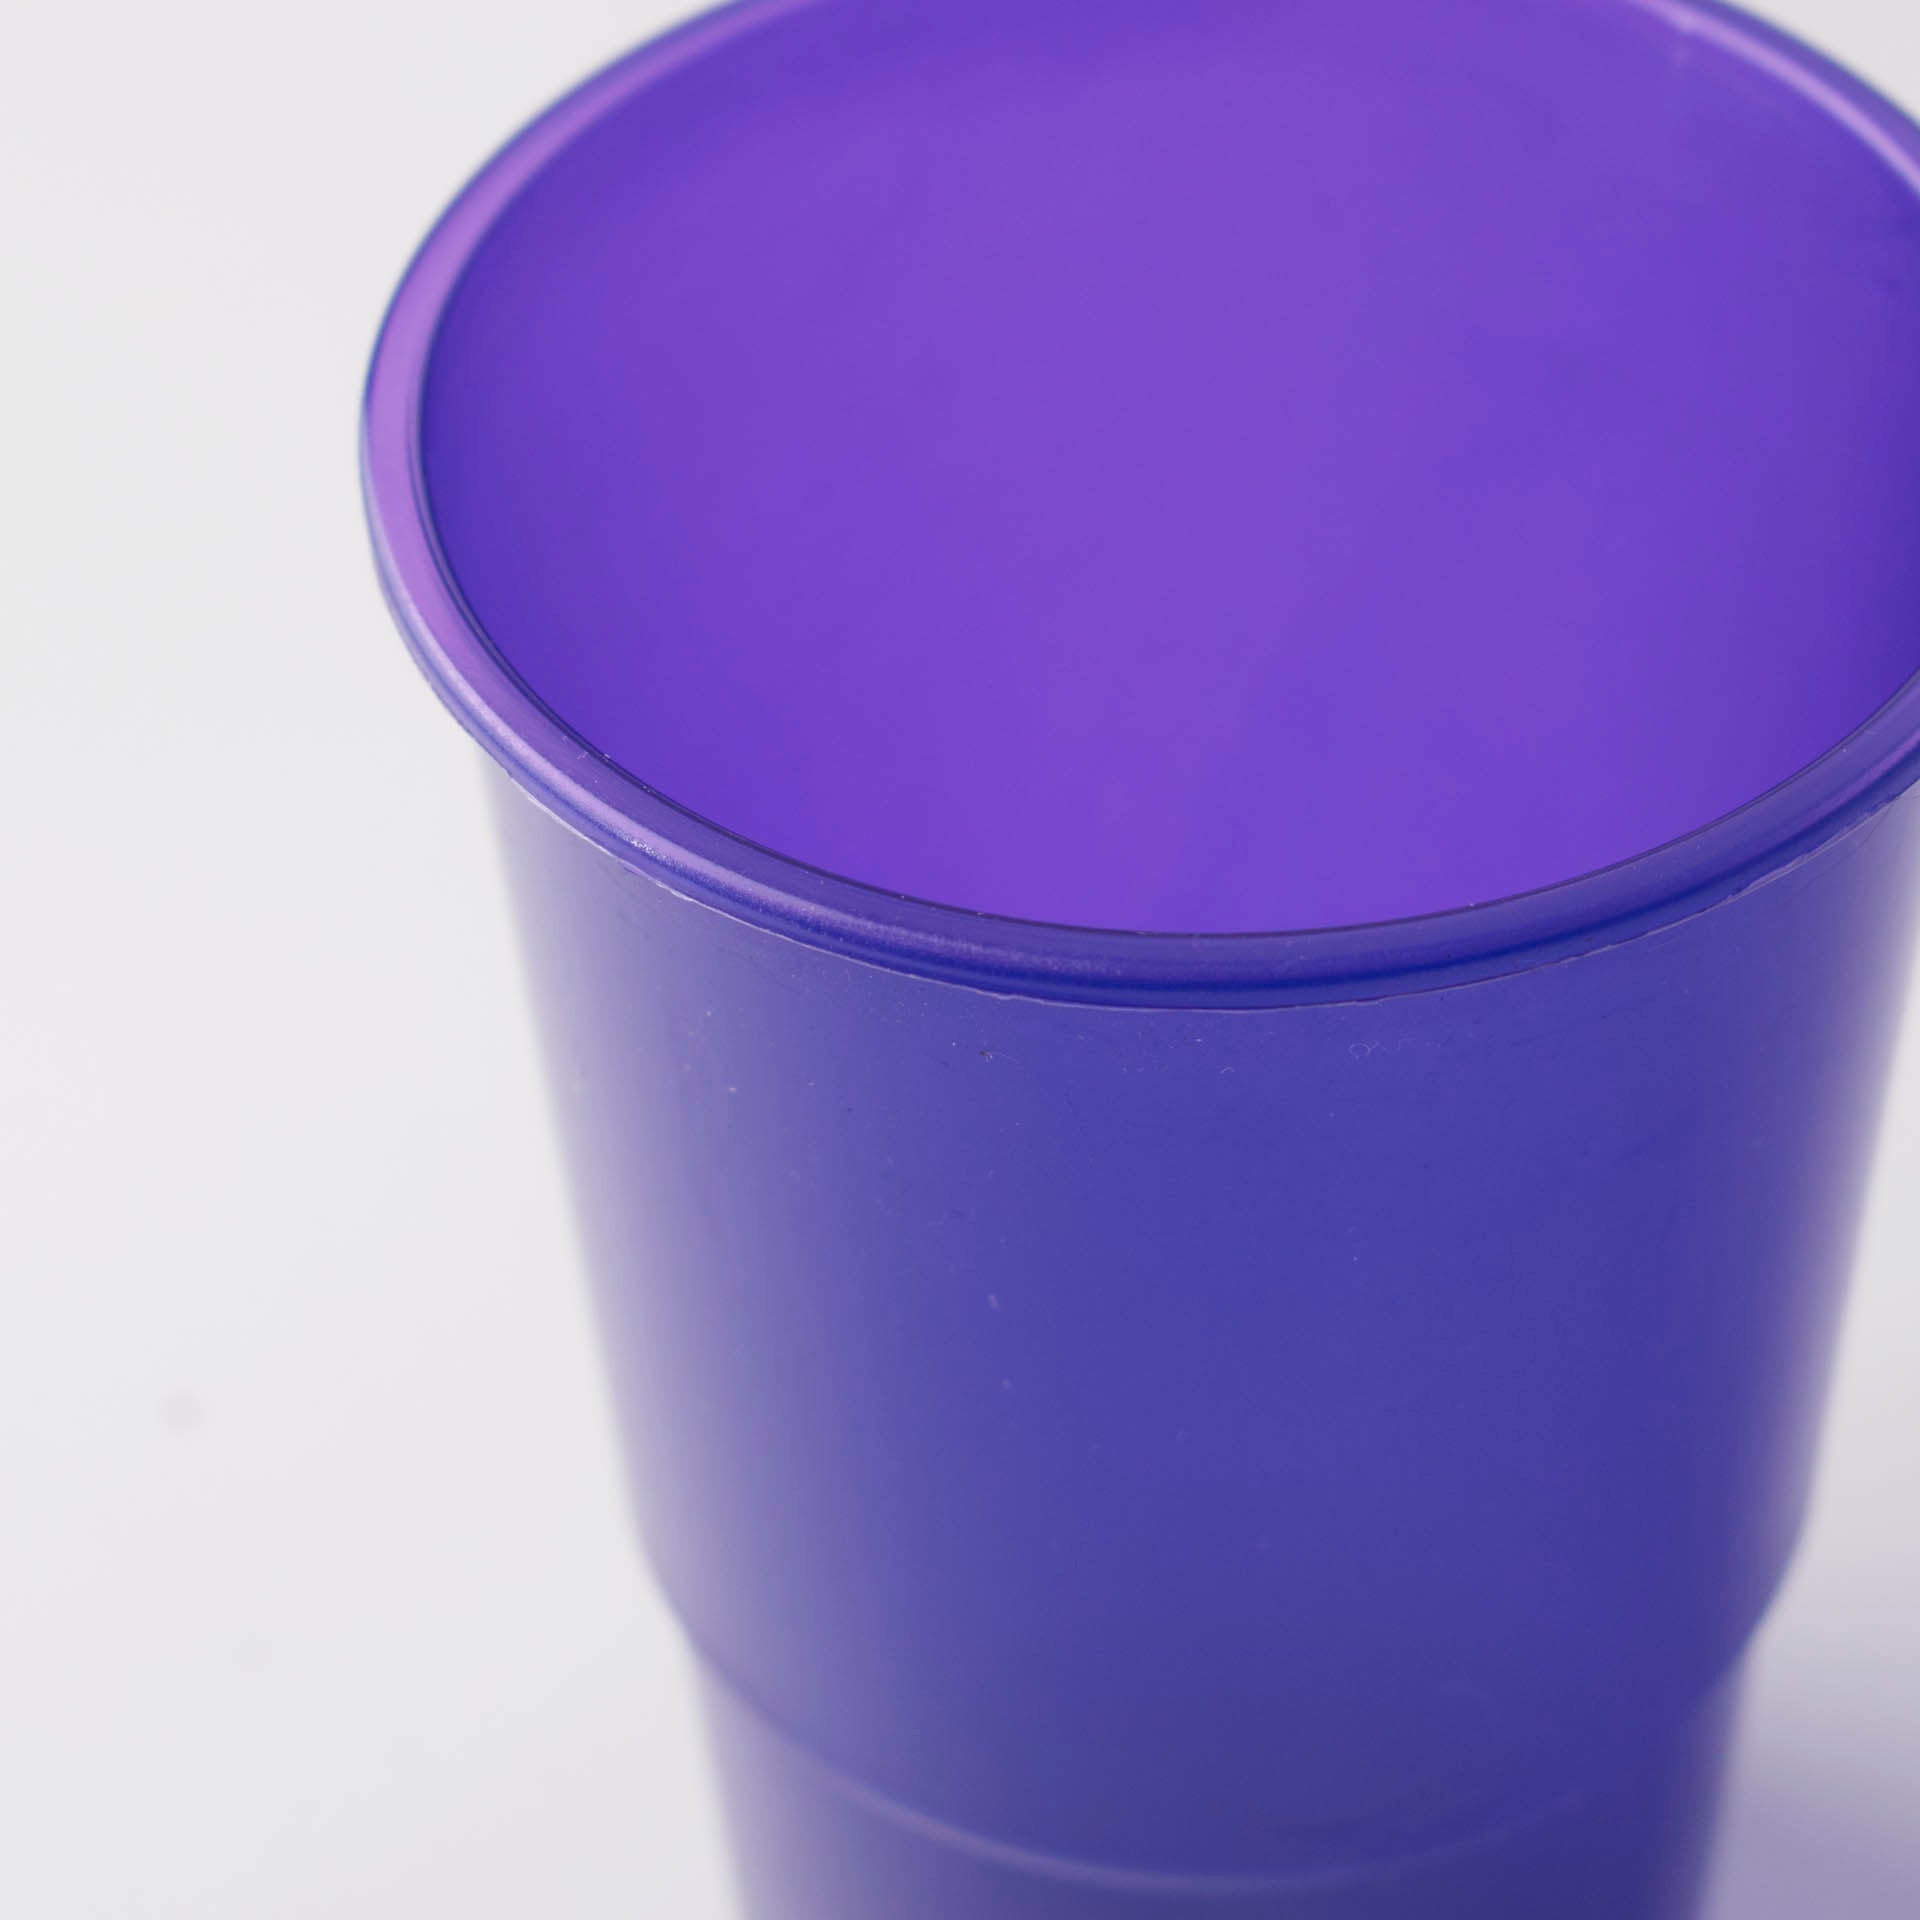 500ml Milla Plastic Cup Buzz 10pc